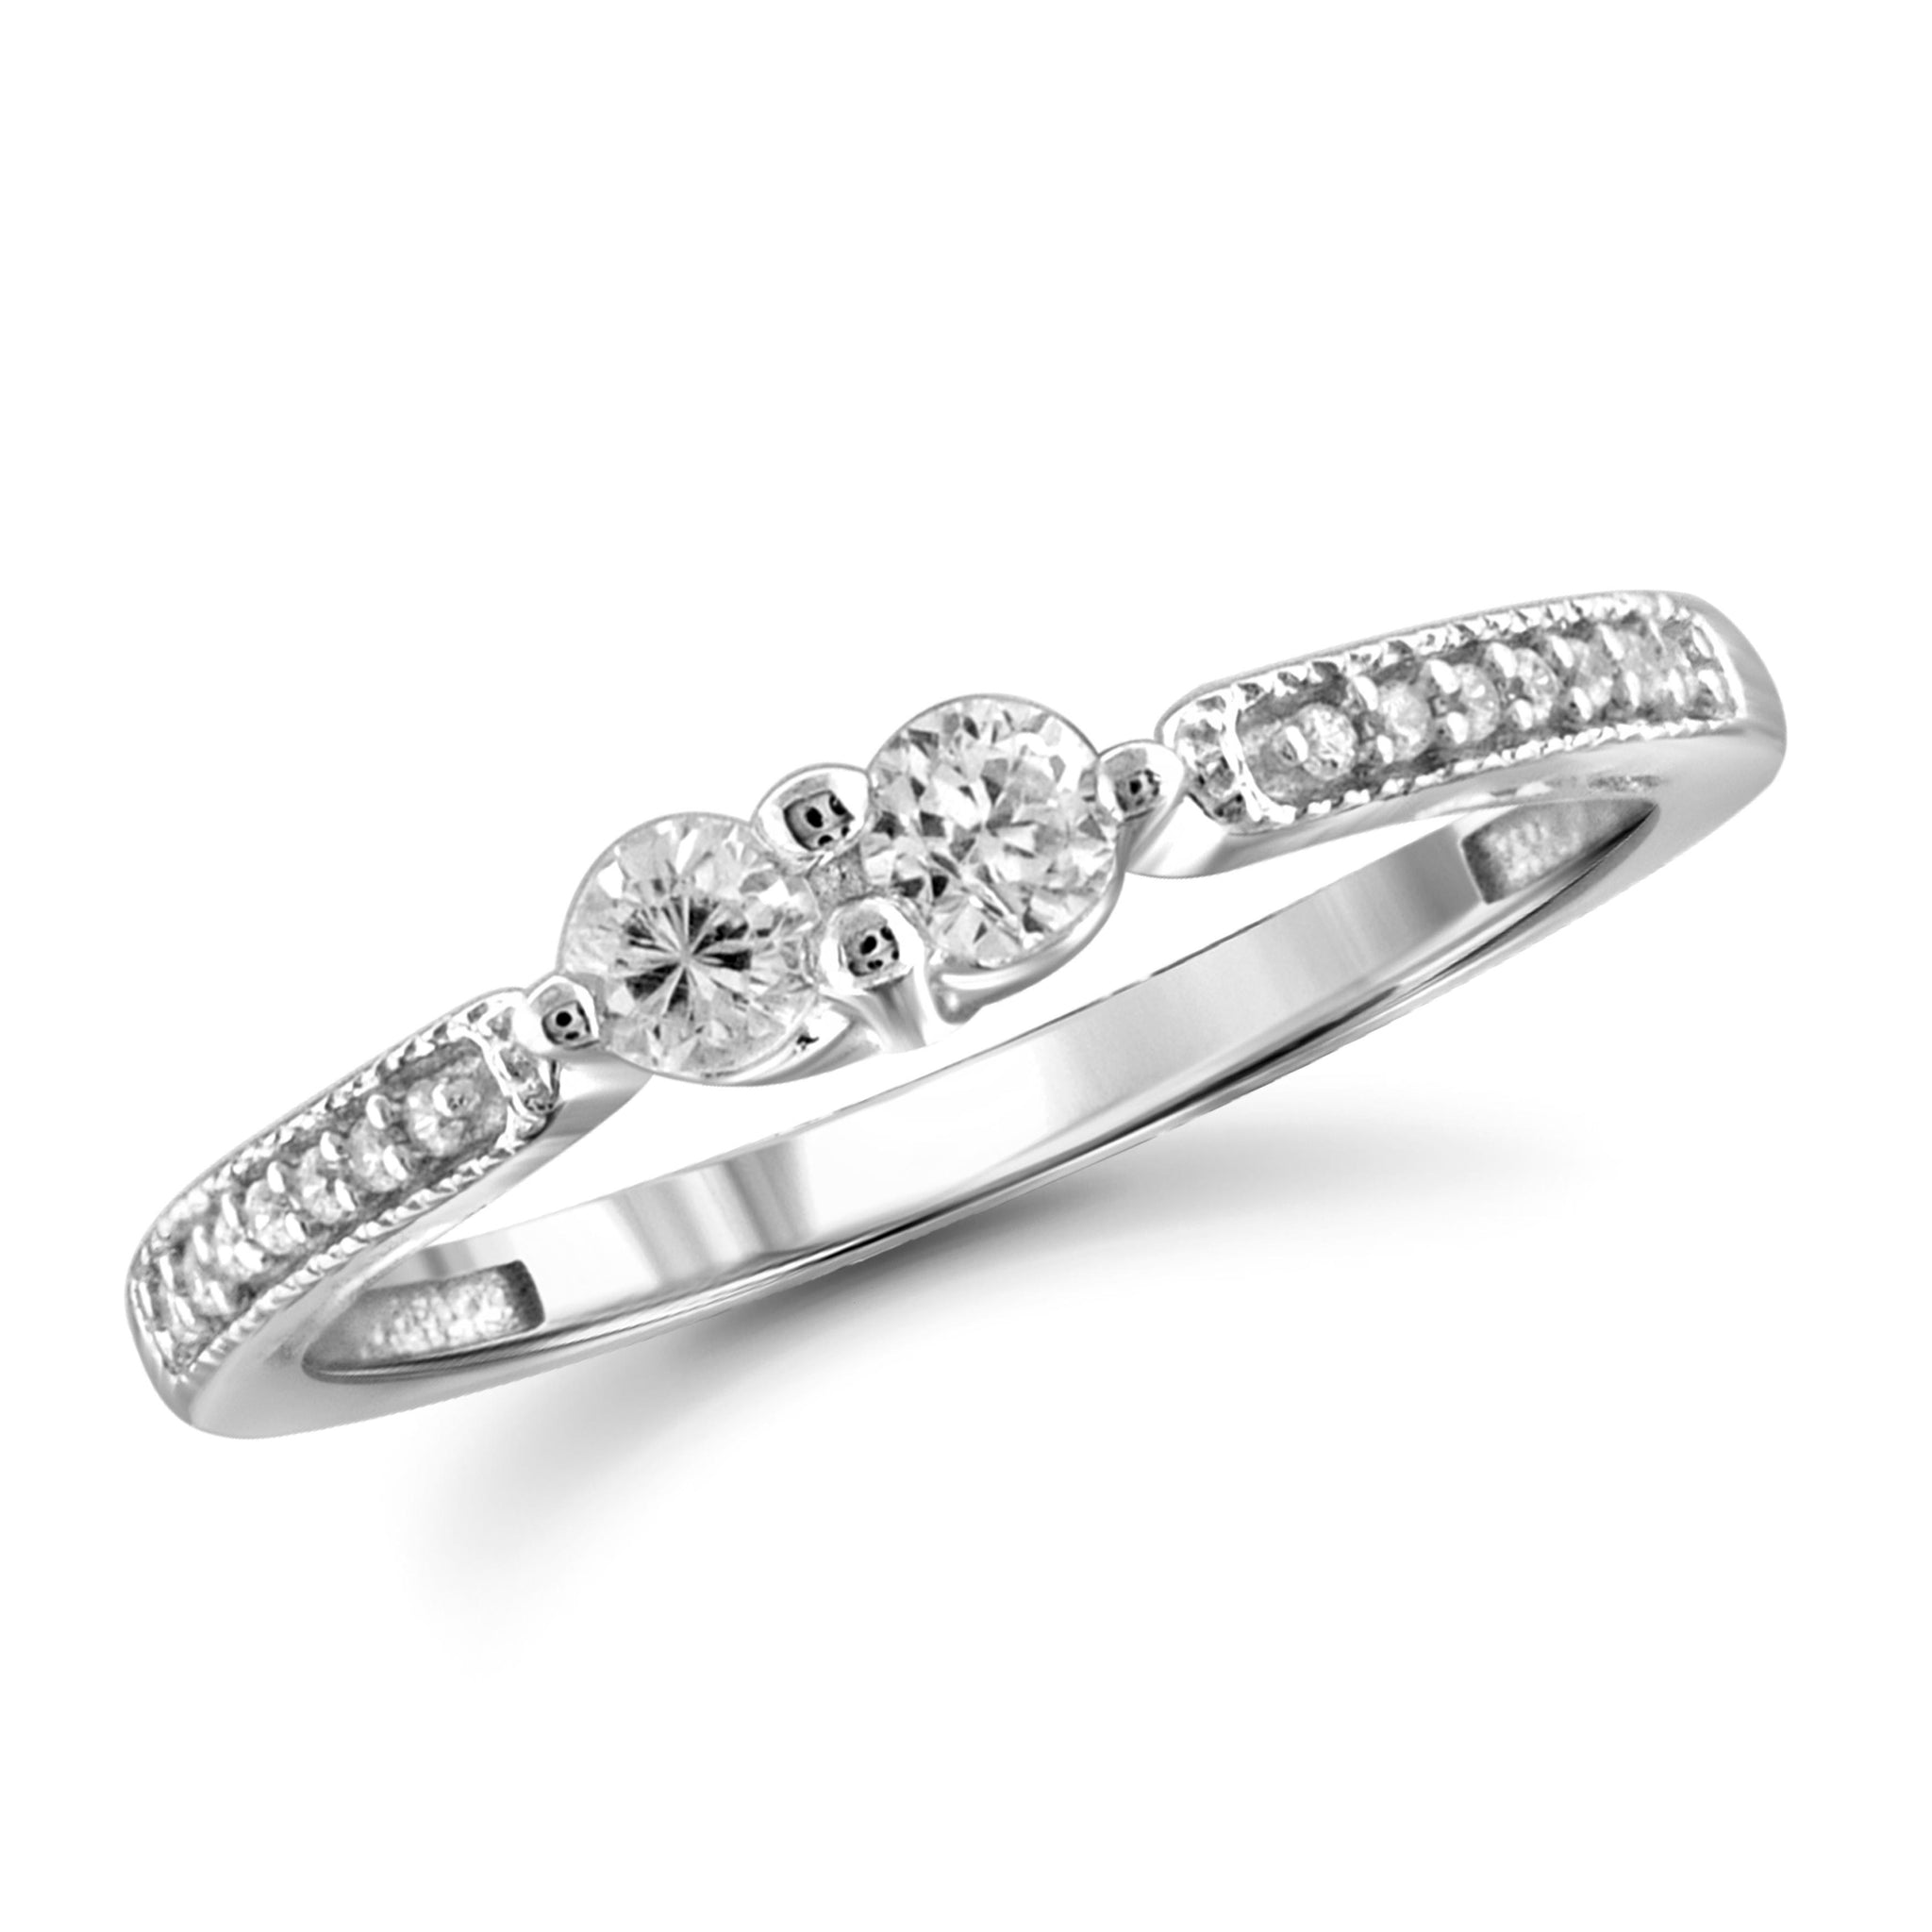 Jewelnova 1/4 Carat T.W. White Diamond 10K White Gold Promise Ring - Assorted Colors